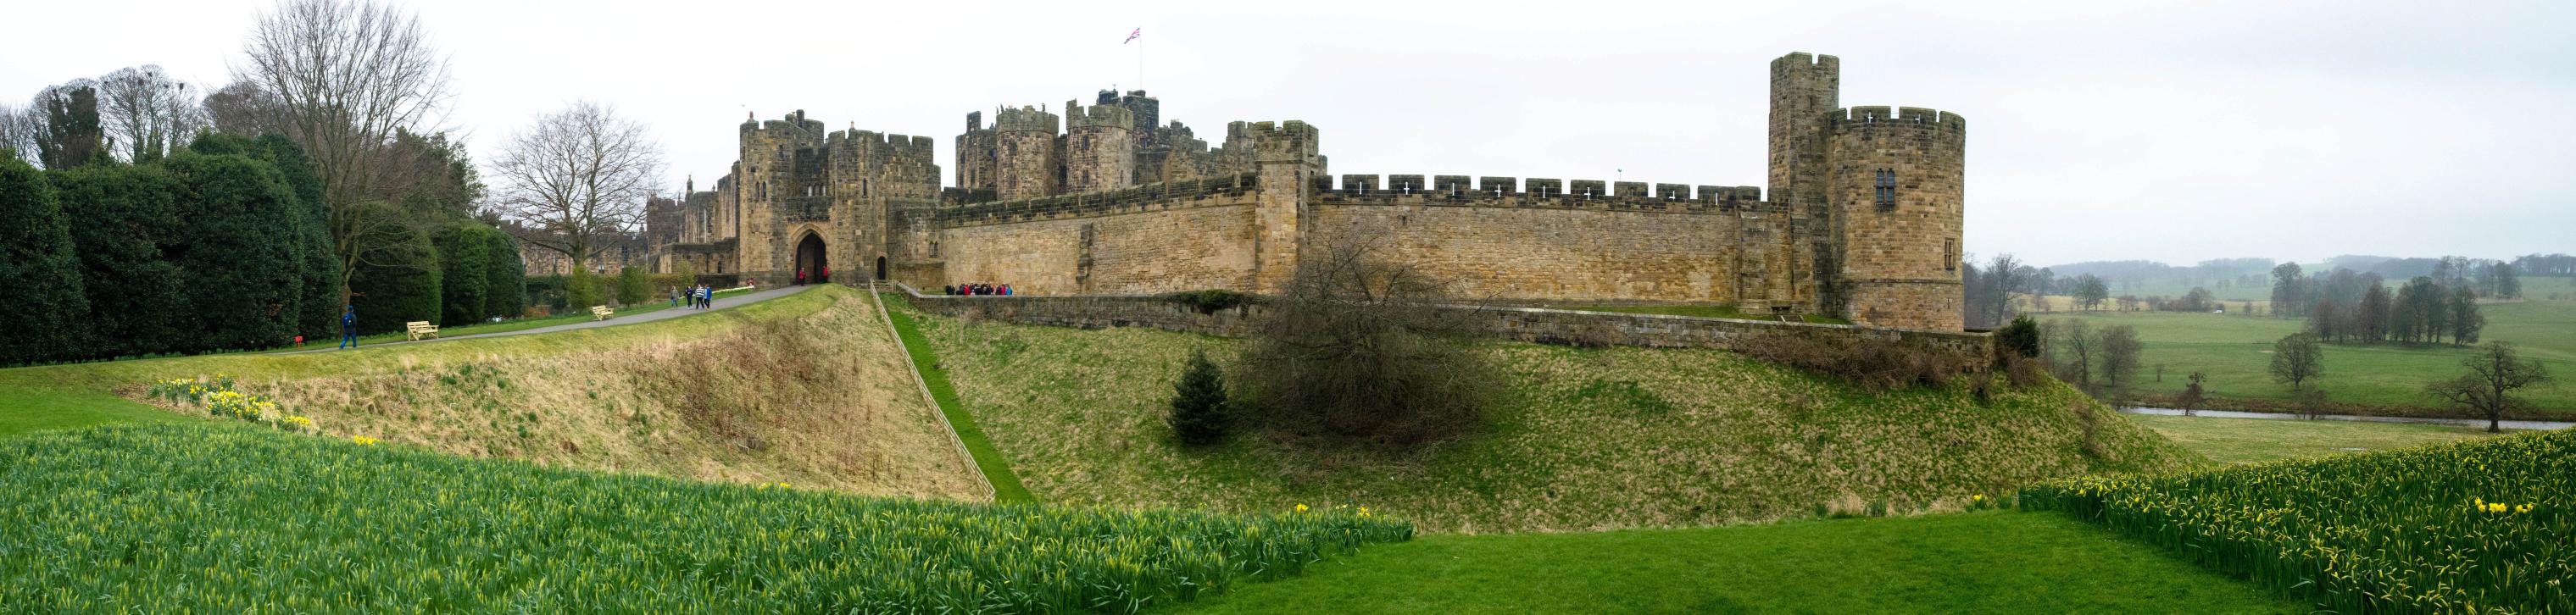 041a-alnwick_castle_Panorama-th.jpg